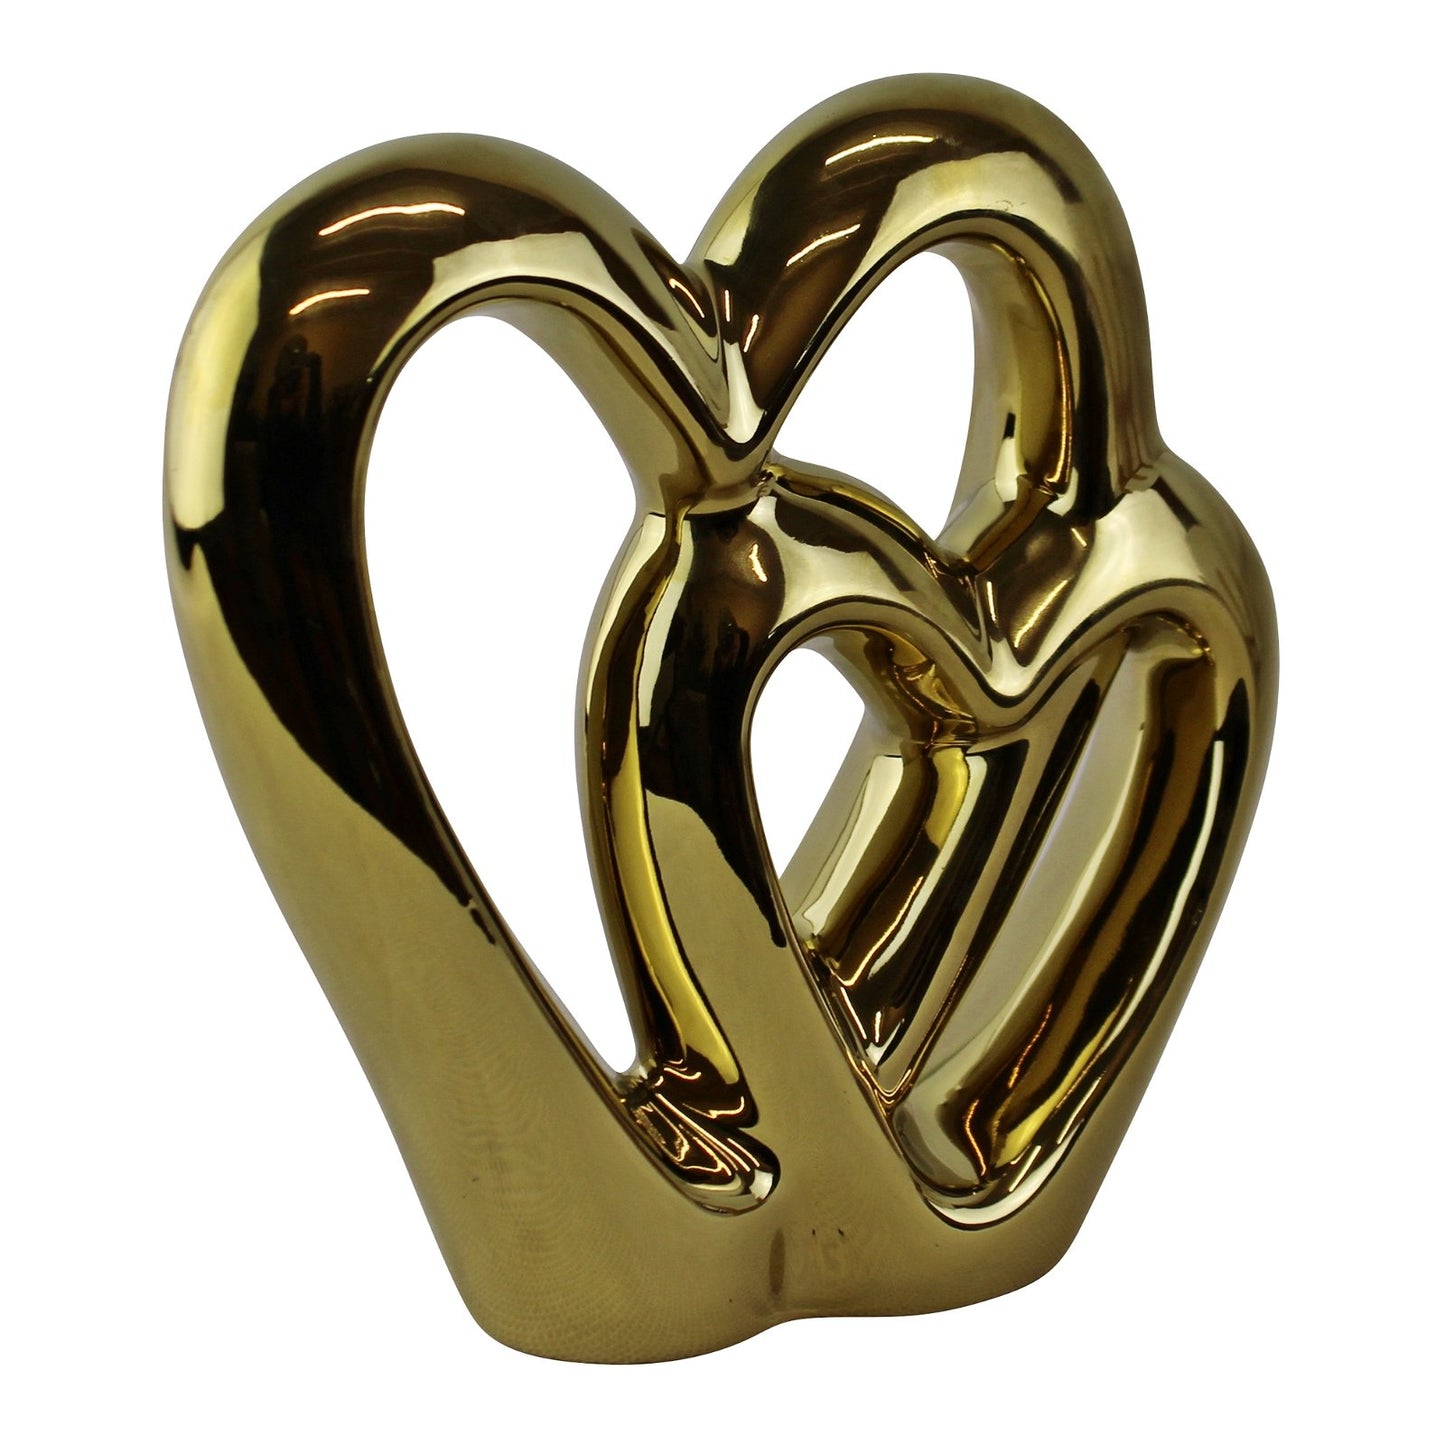 Gold Double Heart Ornament, 15cm. - Kaftan direct